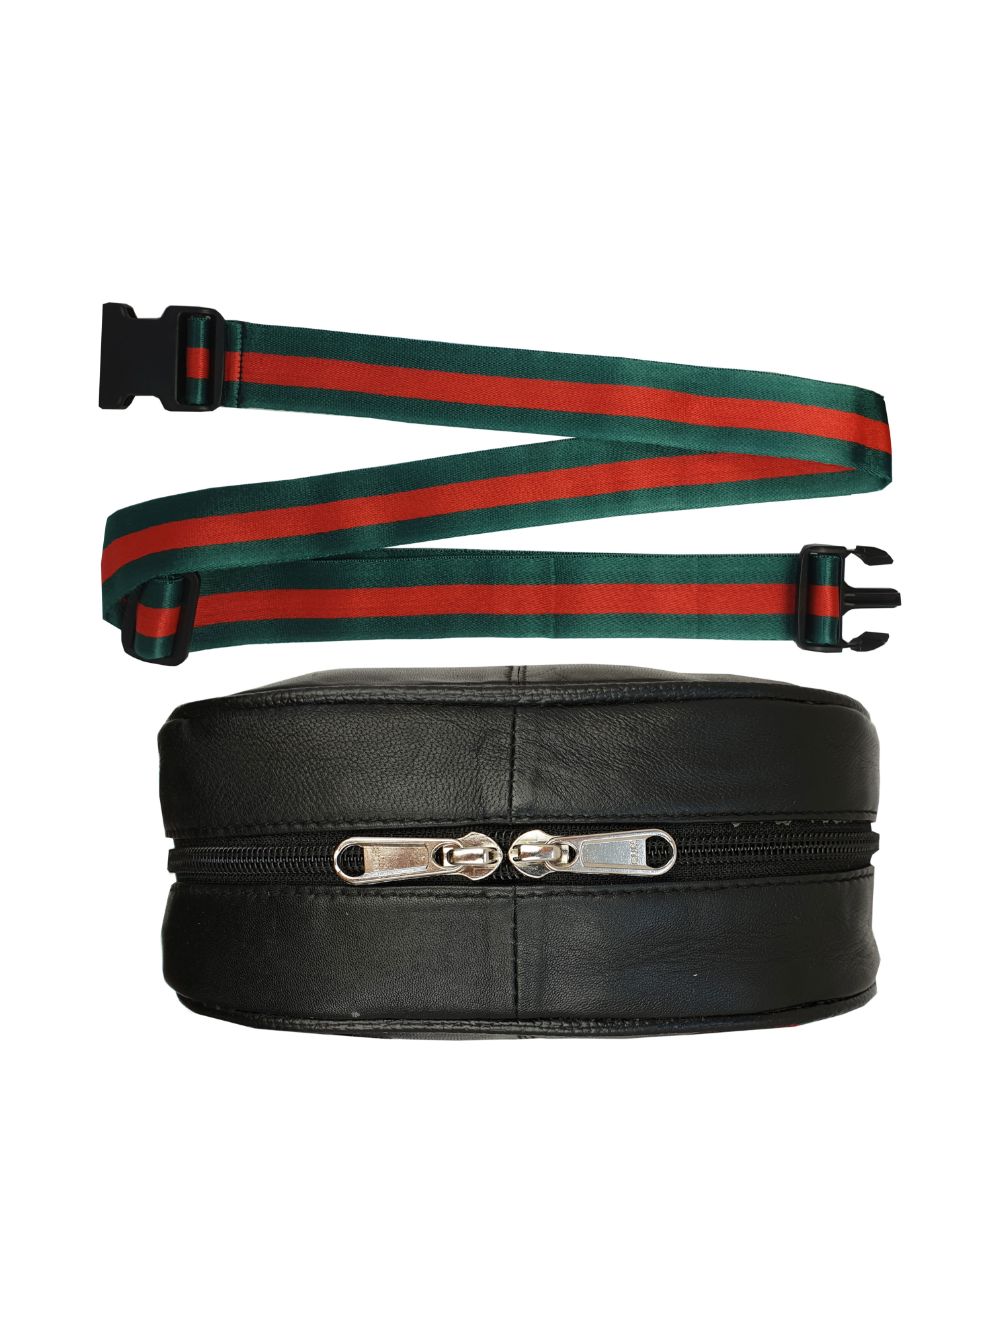 Roamlite Festival Bumbag Black Leather RL167 belt and bag